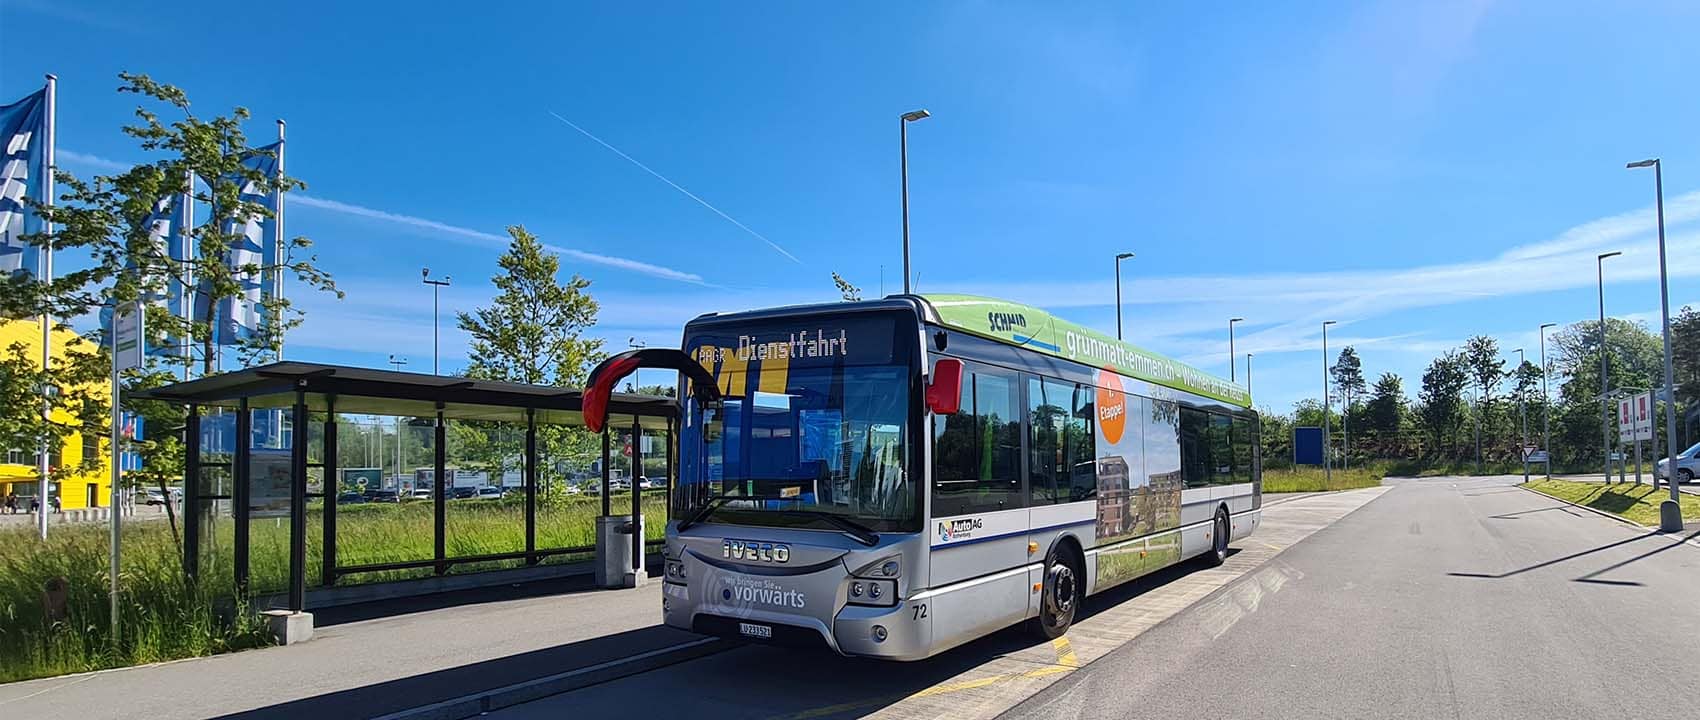 Header_Autoag_Rothenburg_Bus_3